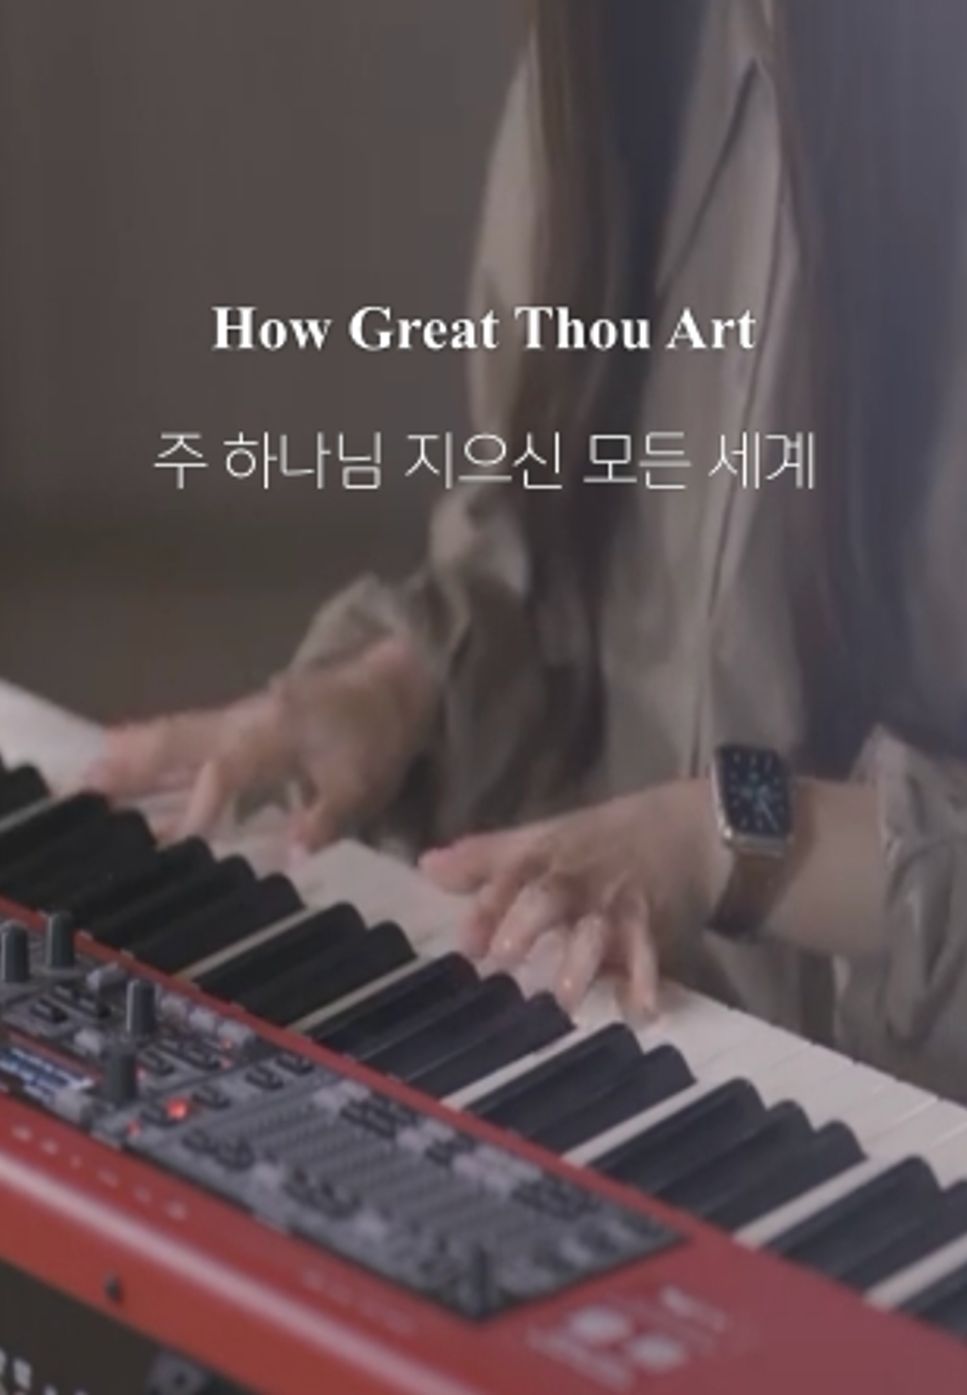 Swedish Folk Melody - 주 하나님 지으신 모든 세계 How Great Thou Art by Choi Chanmi